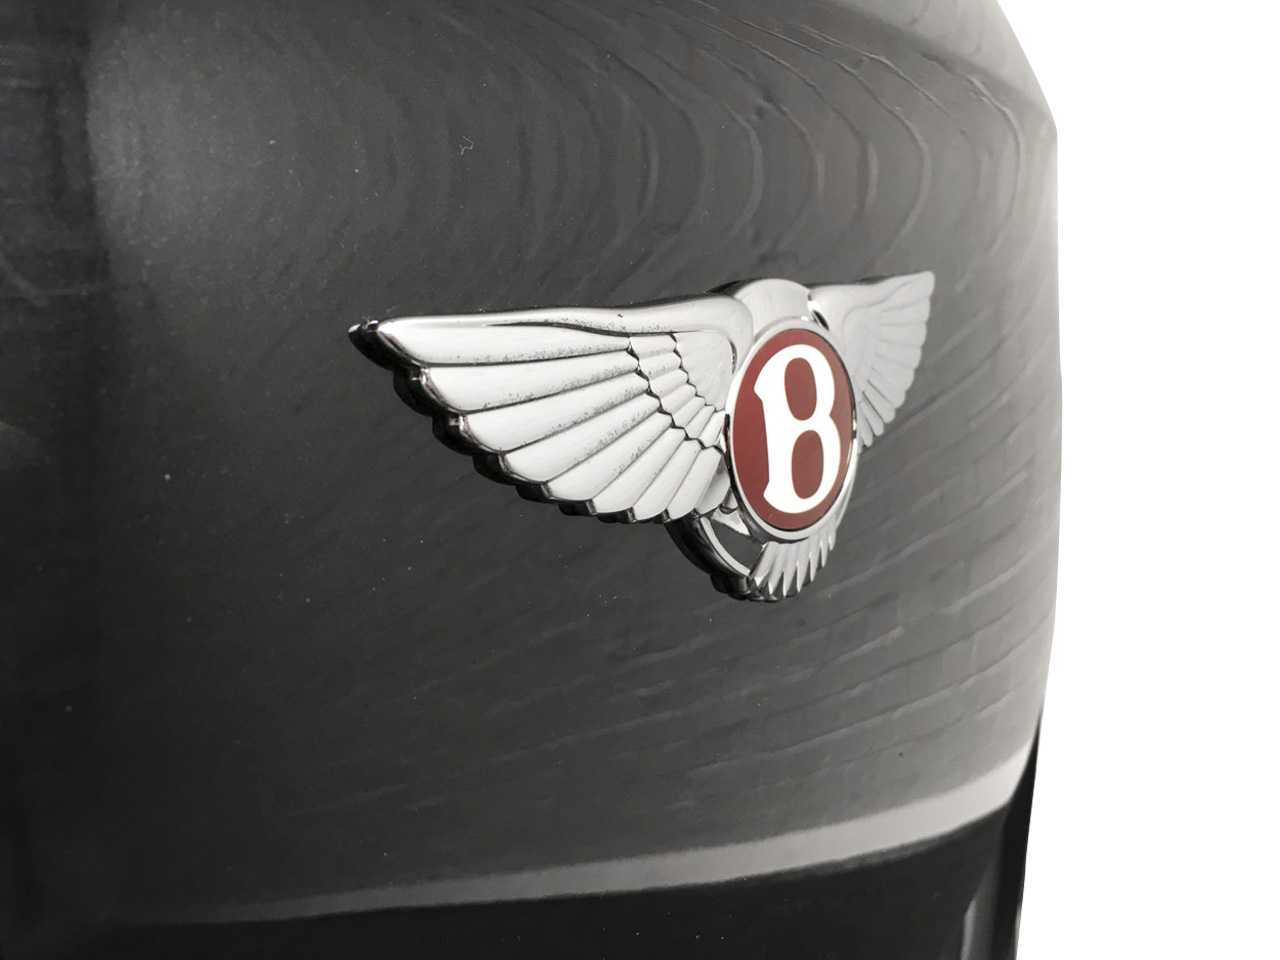 Bentley logo on car